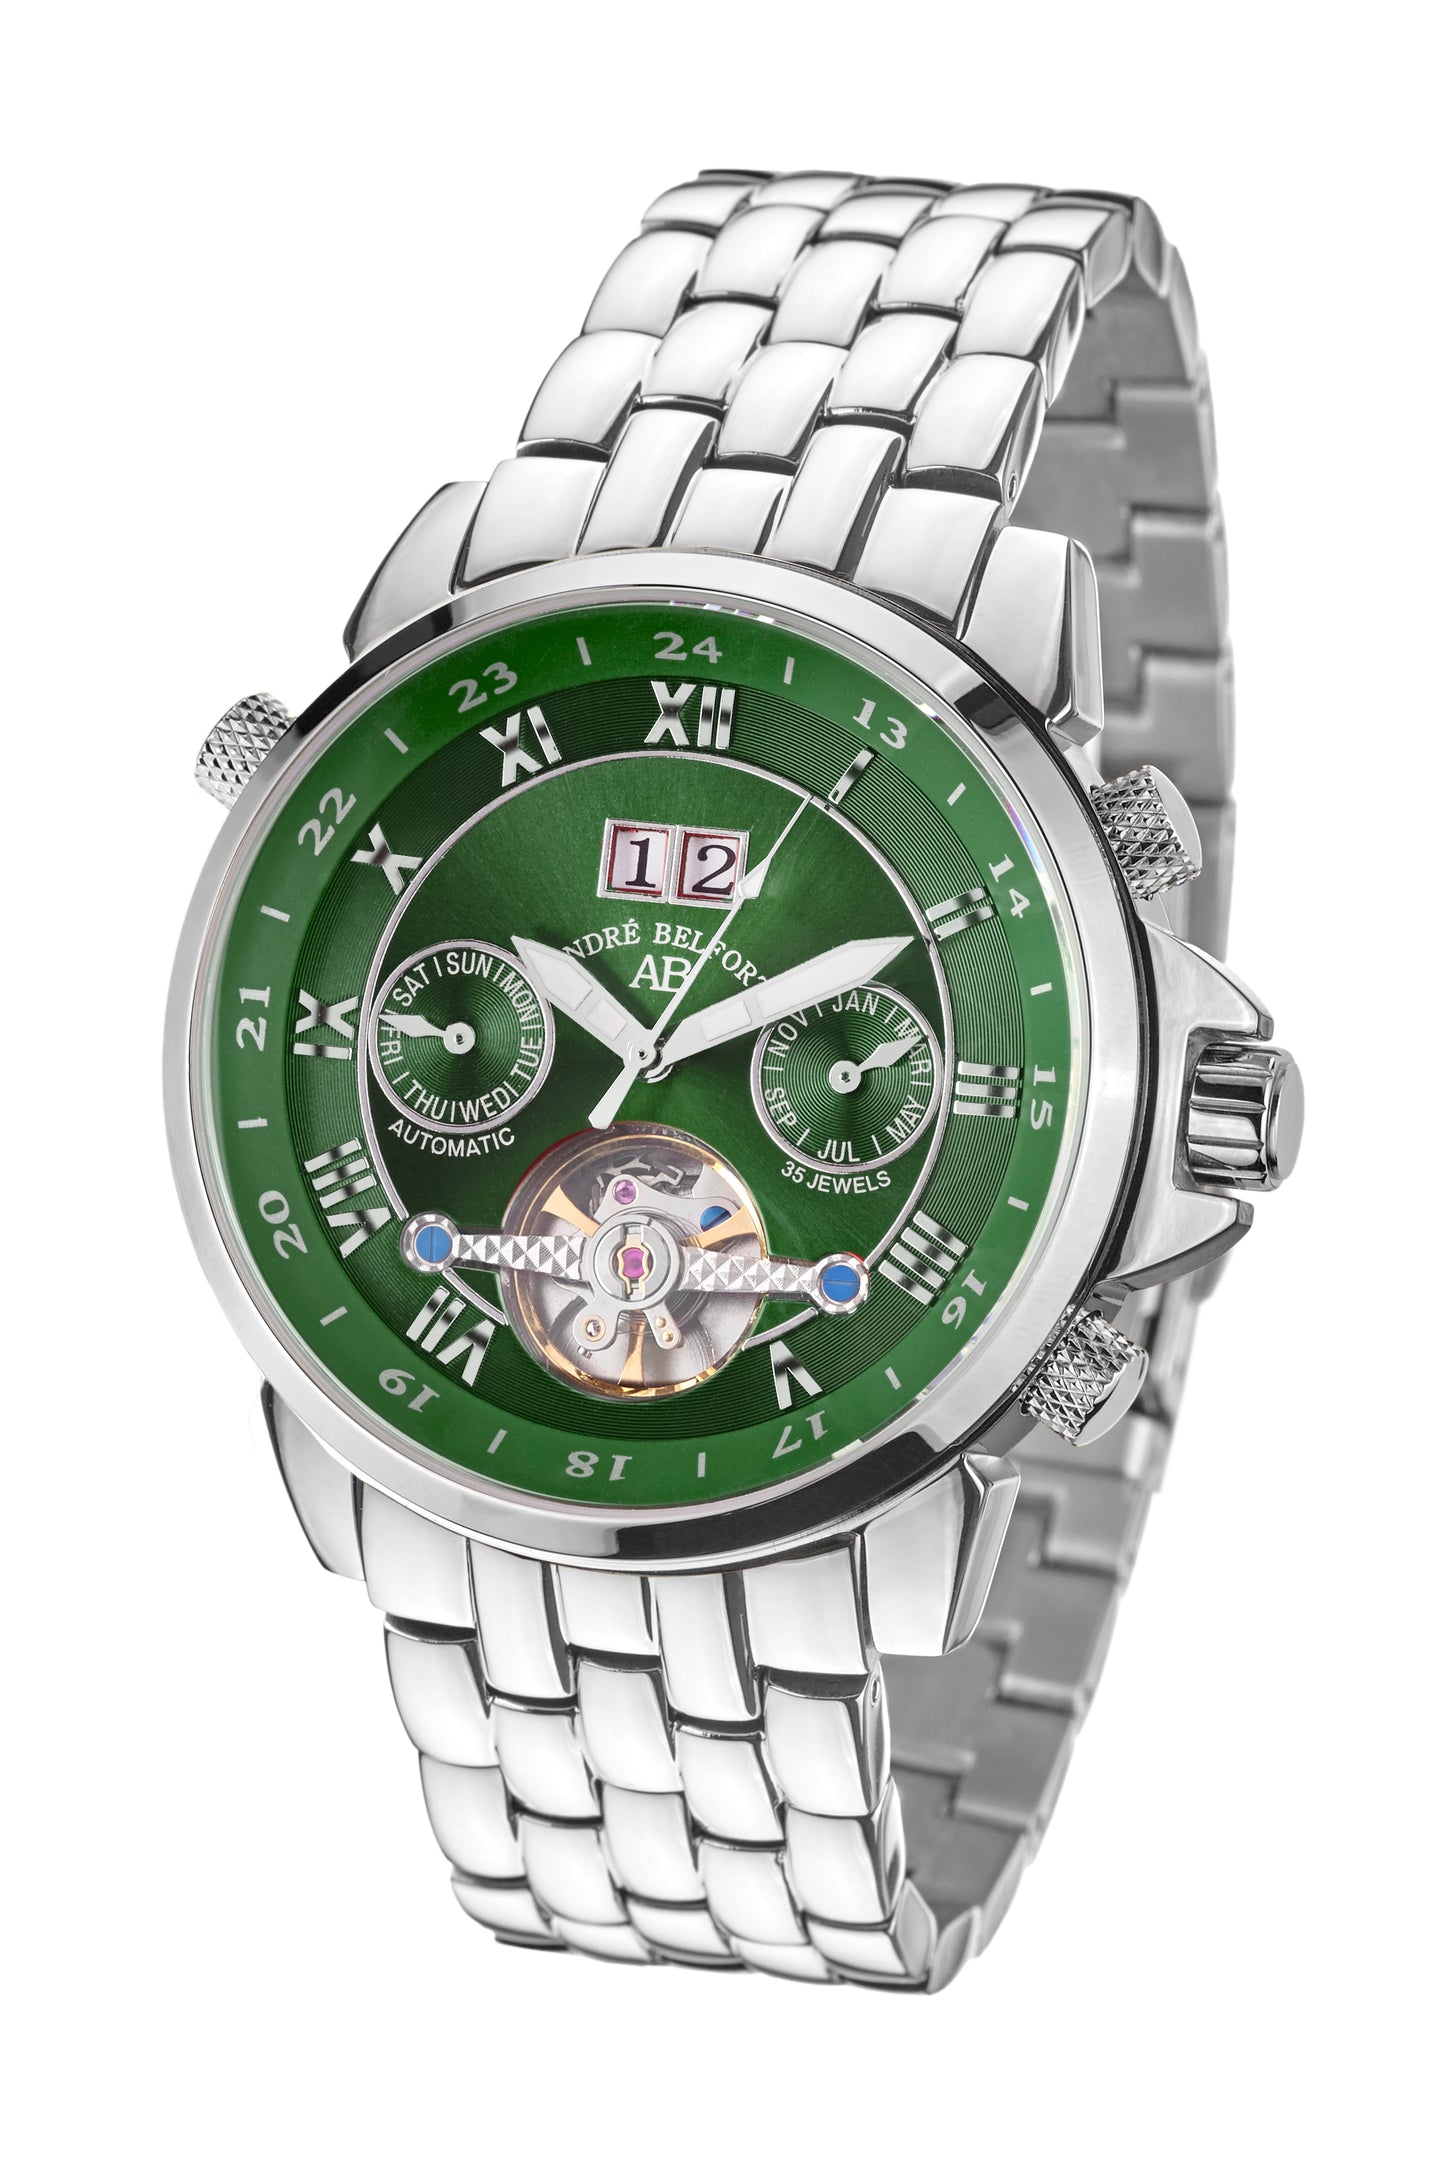 Automatic watches — Étoile Polaire — André Belfort — green